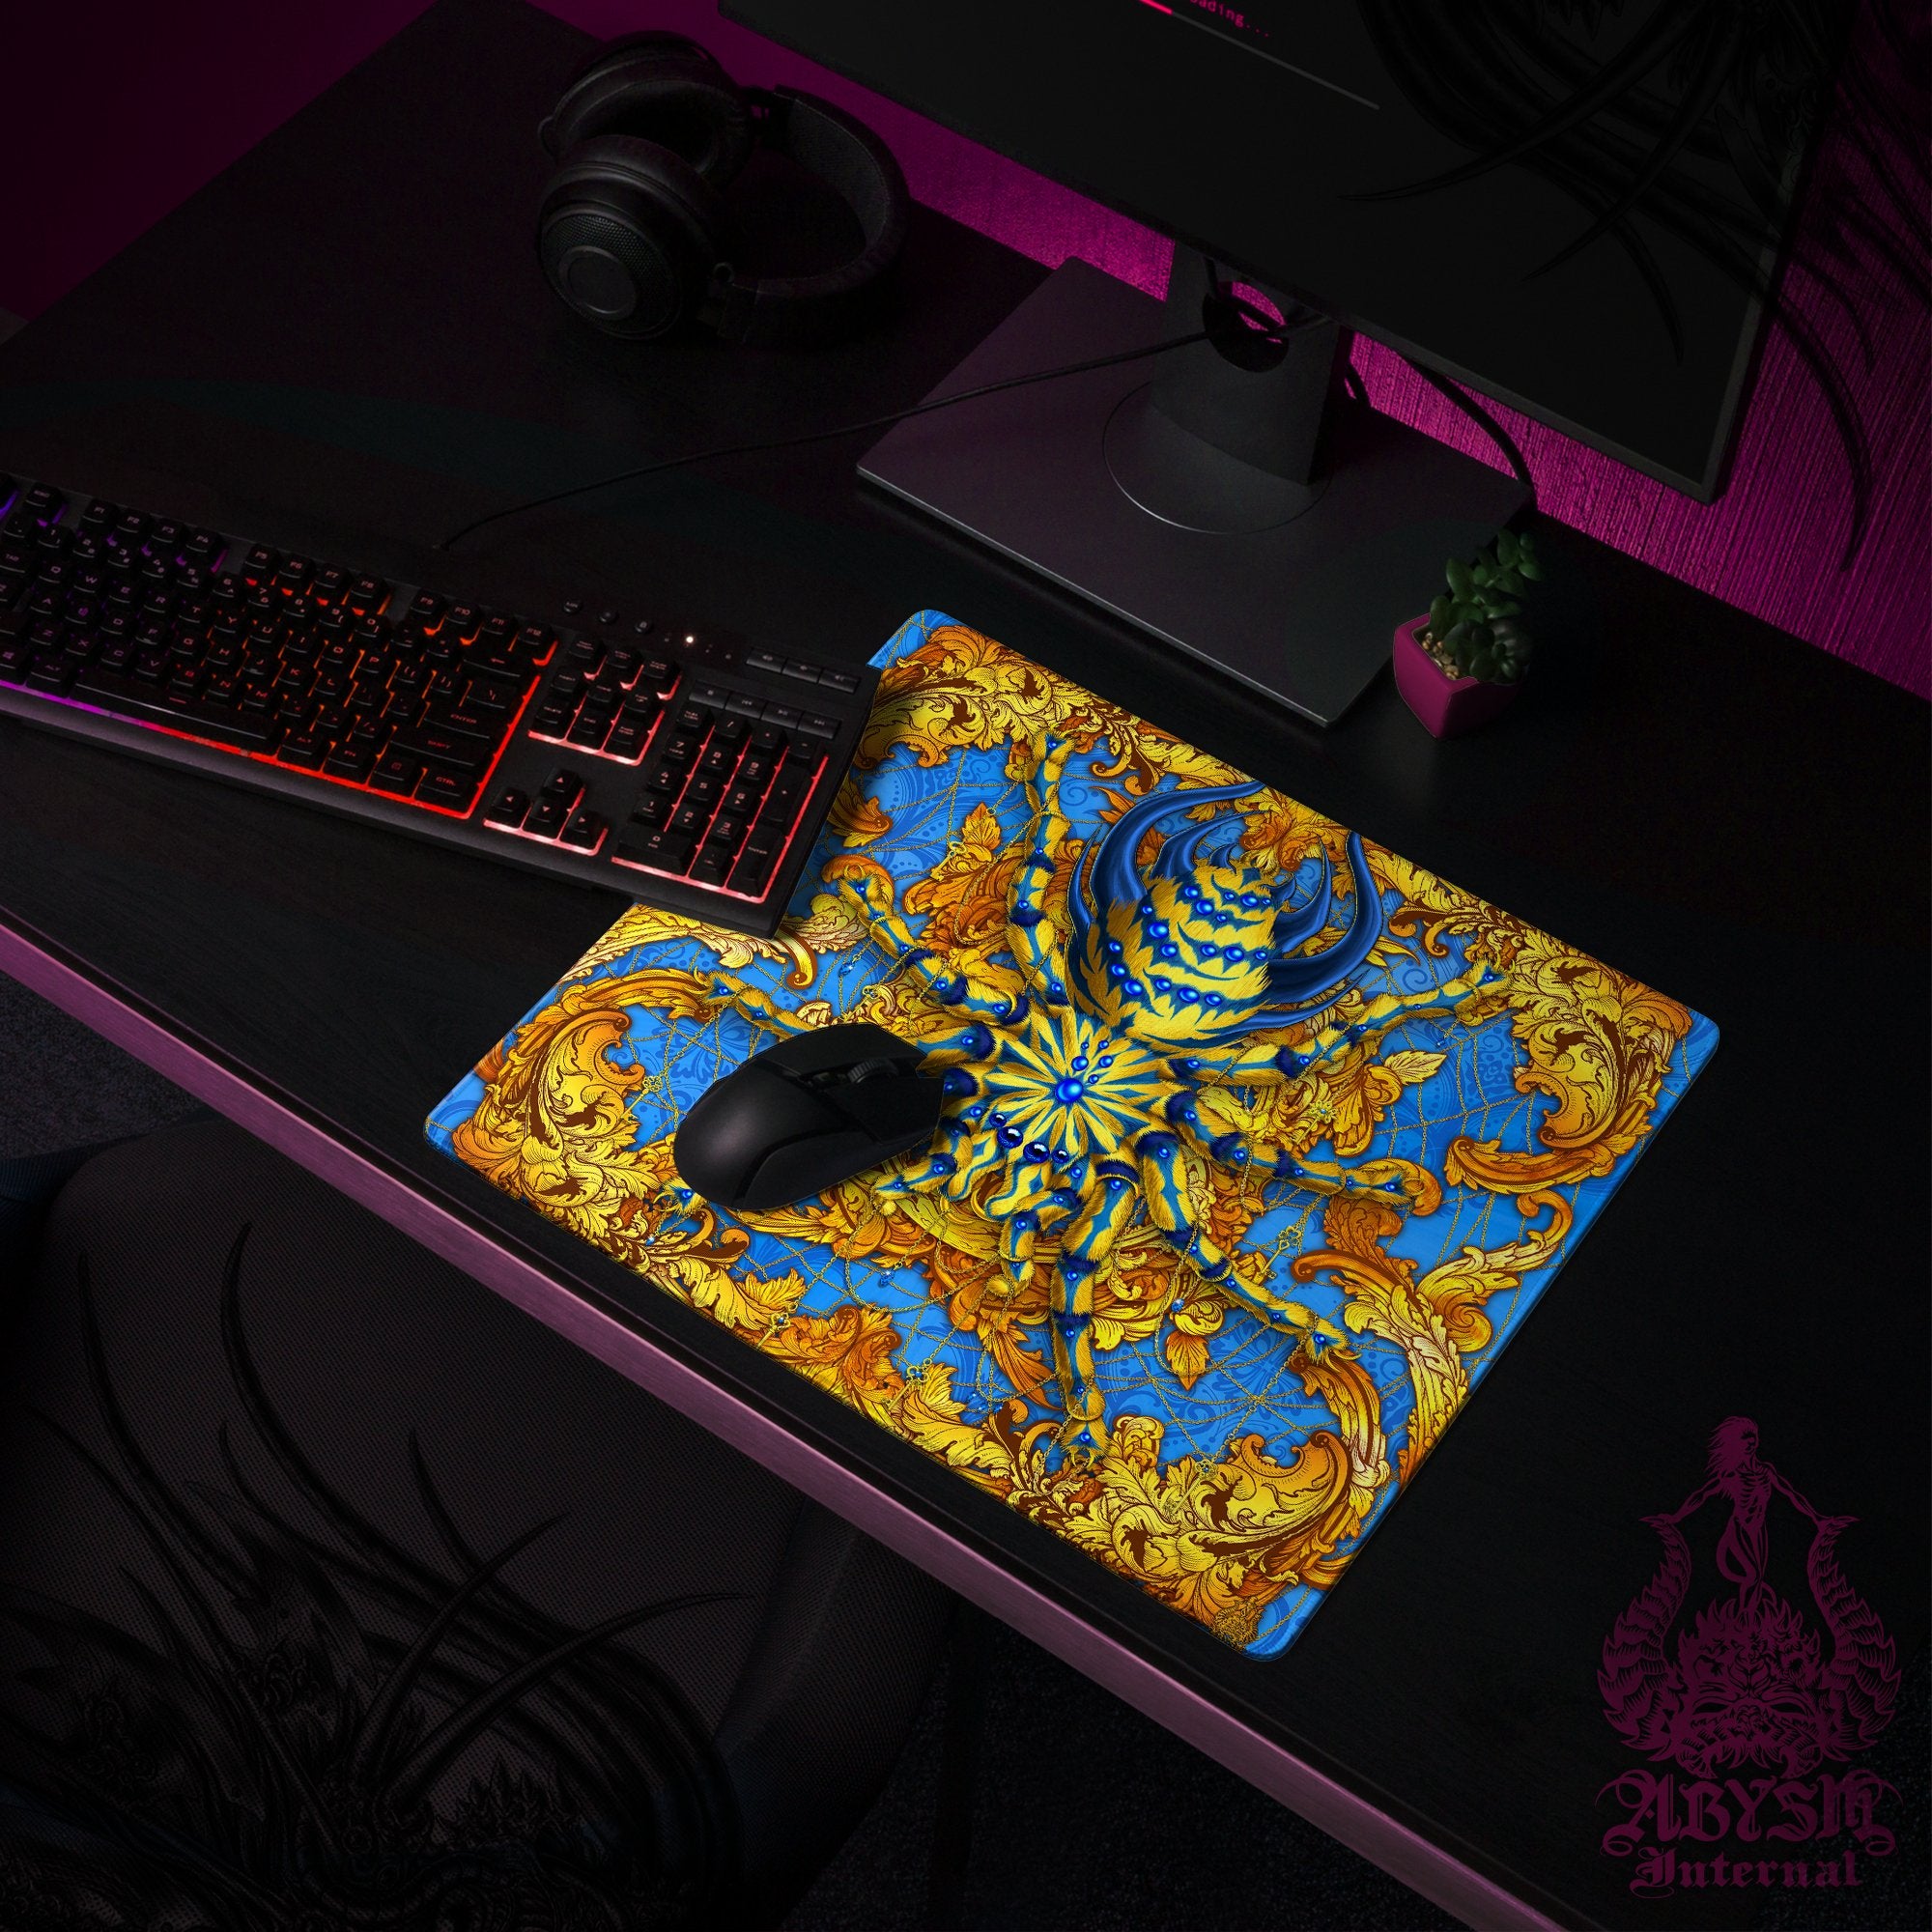 Spider Mouse Pad, Tarantula Gaming Desk Mat, Cyan Gold Workpad, Gamer Table Protector Cover, Art Print - Abysm Internal